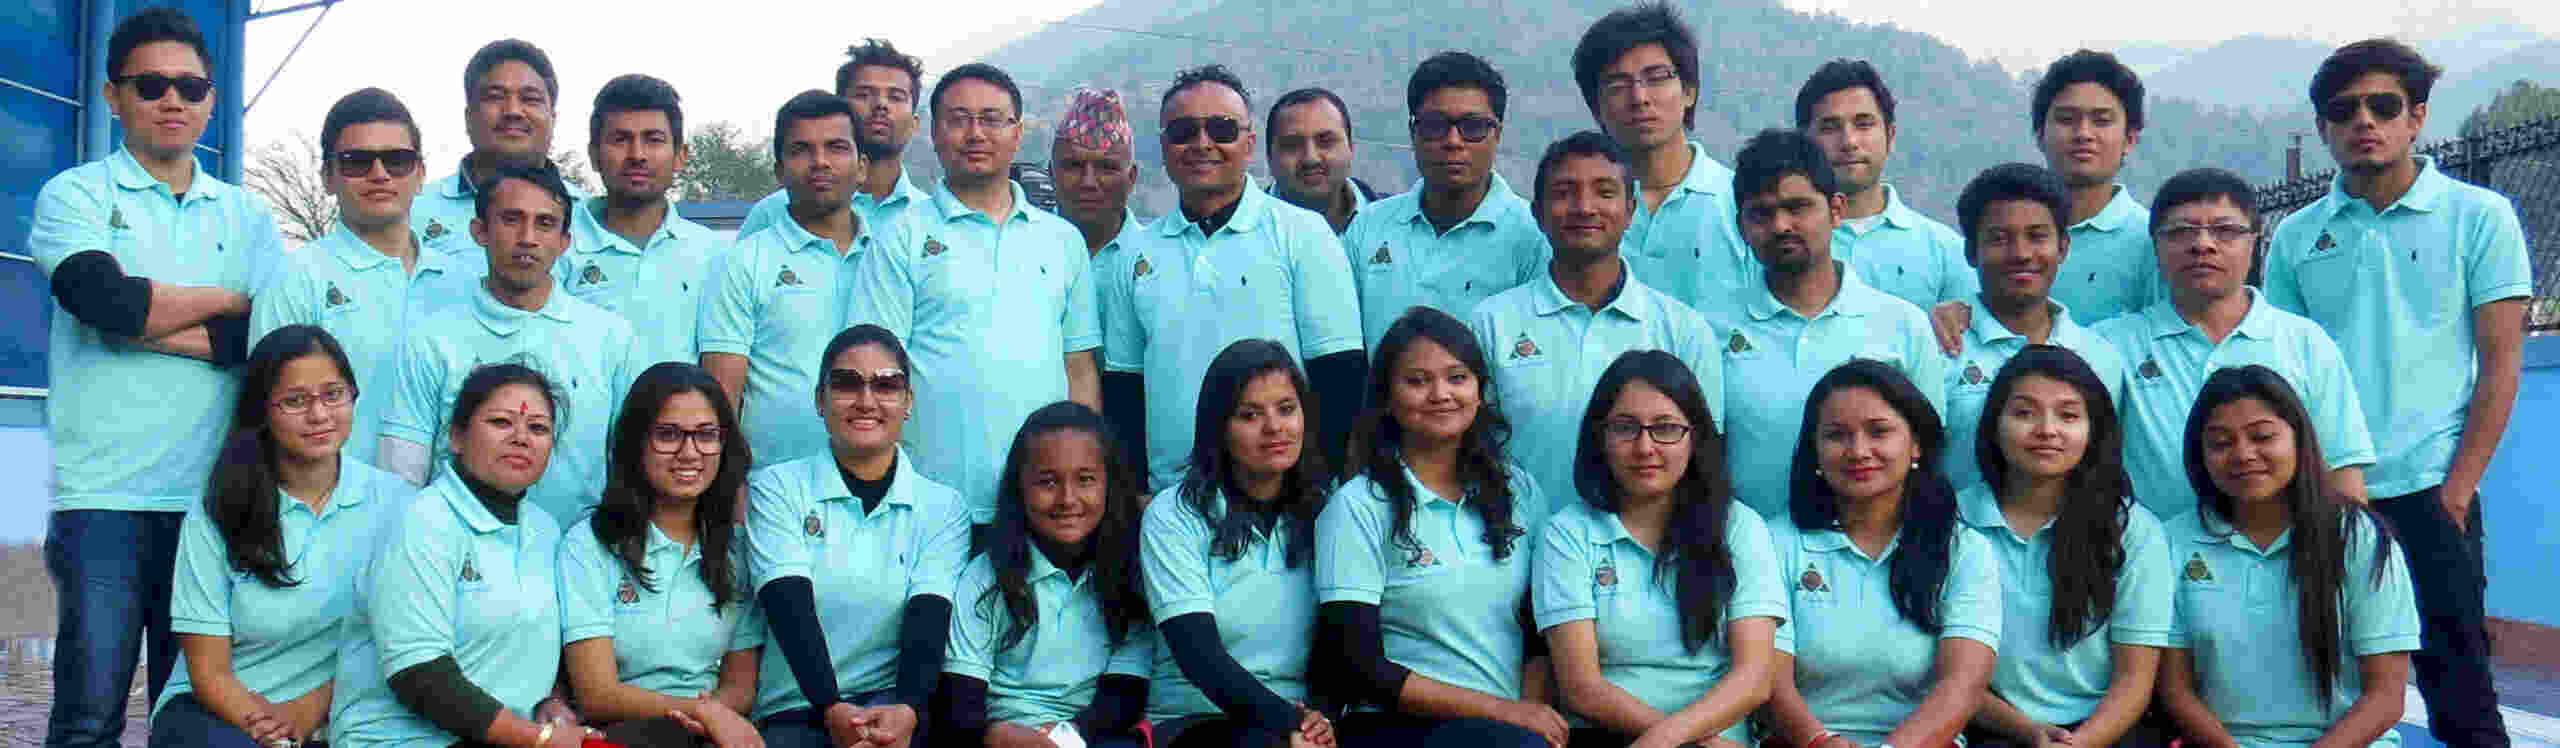 CEDA nepal group image